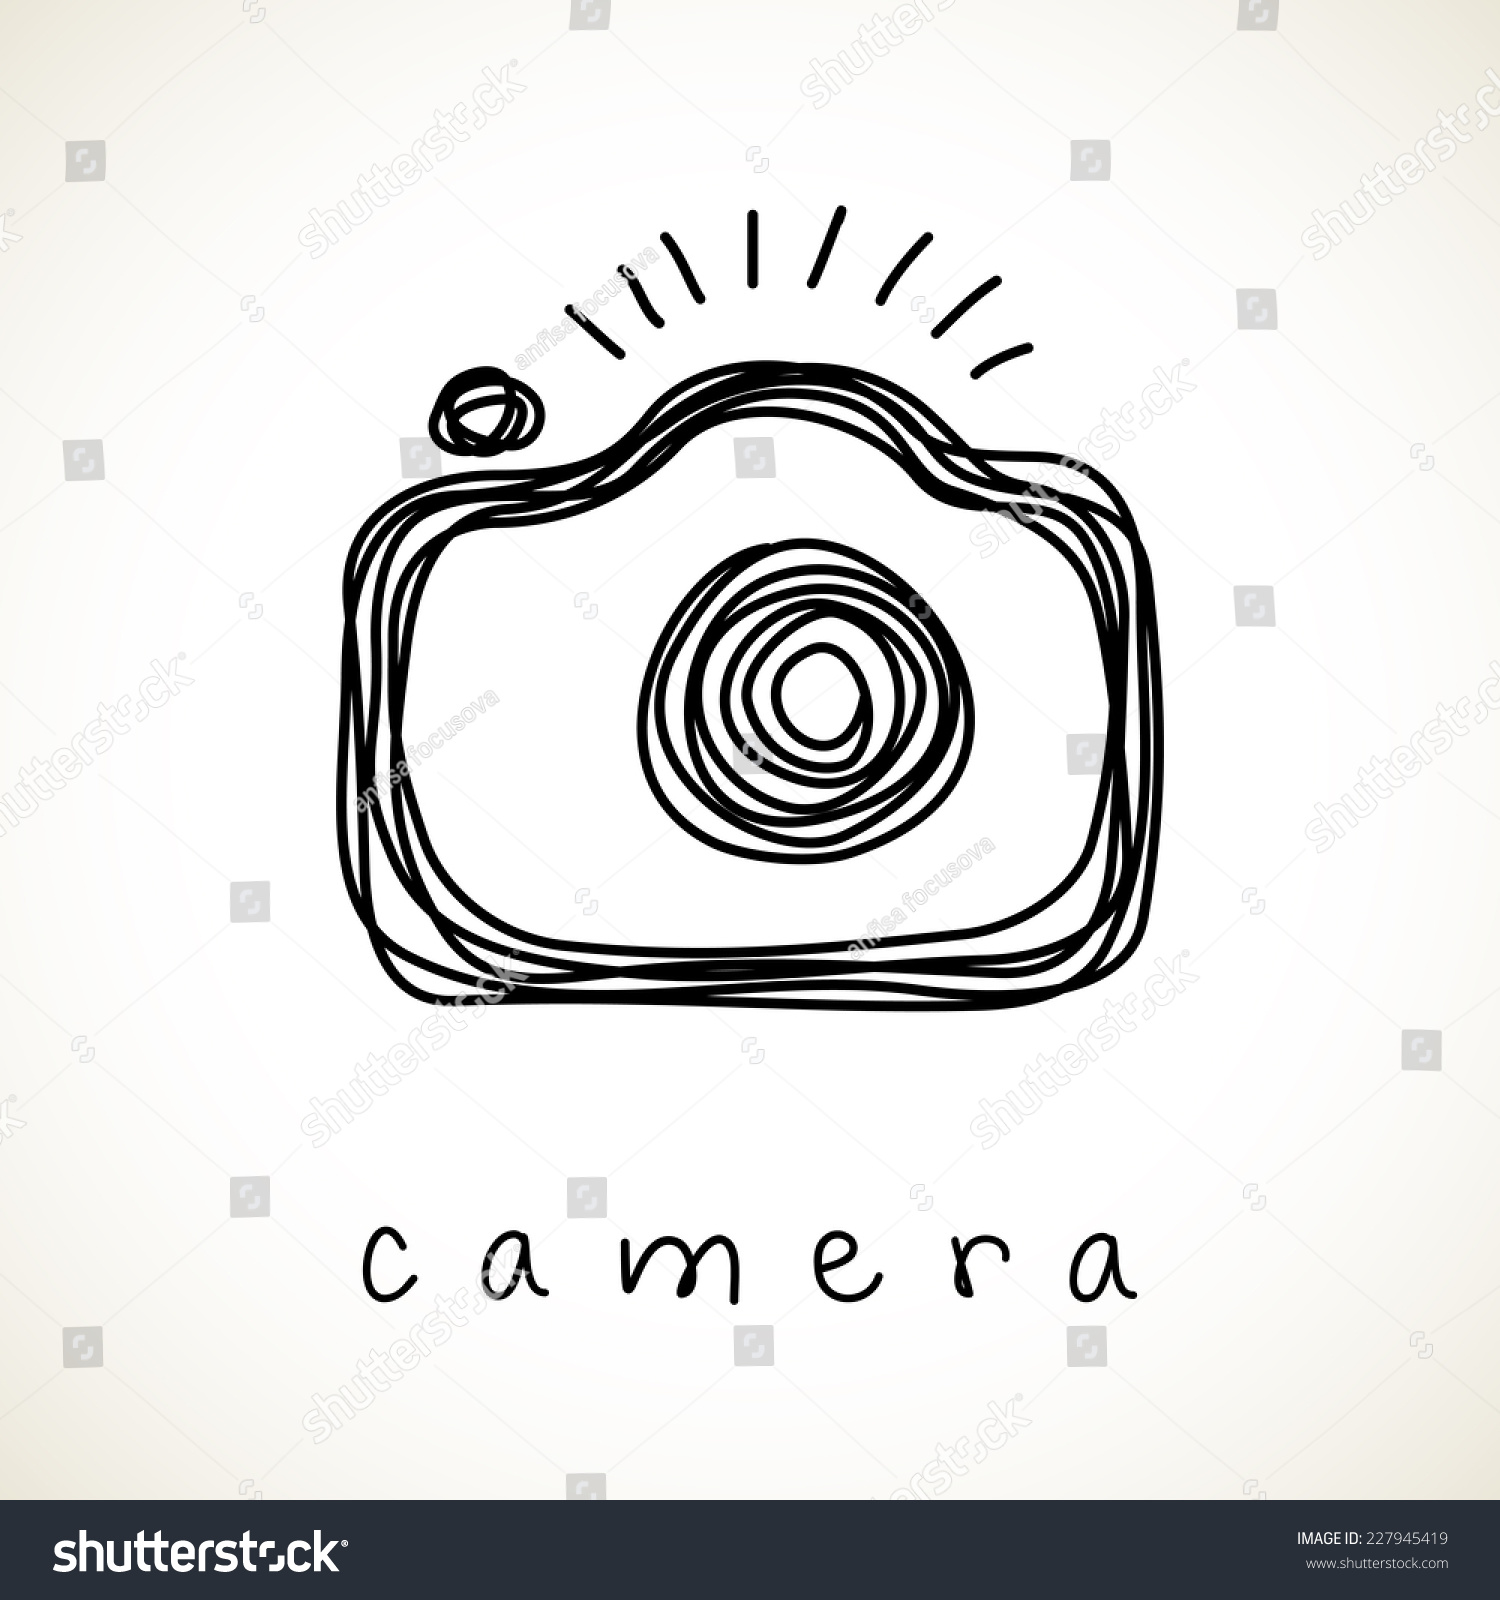 camera clipart doodle - photo #35